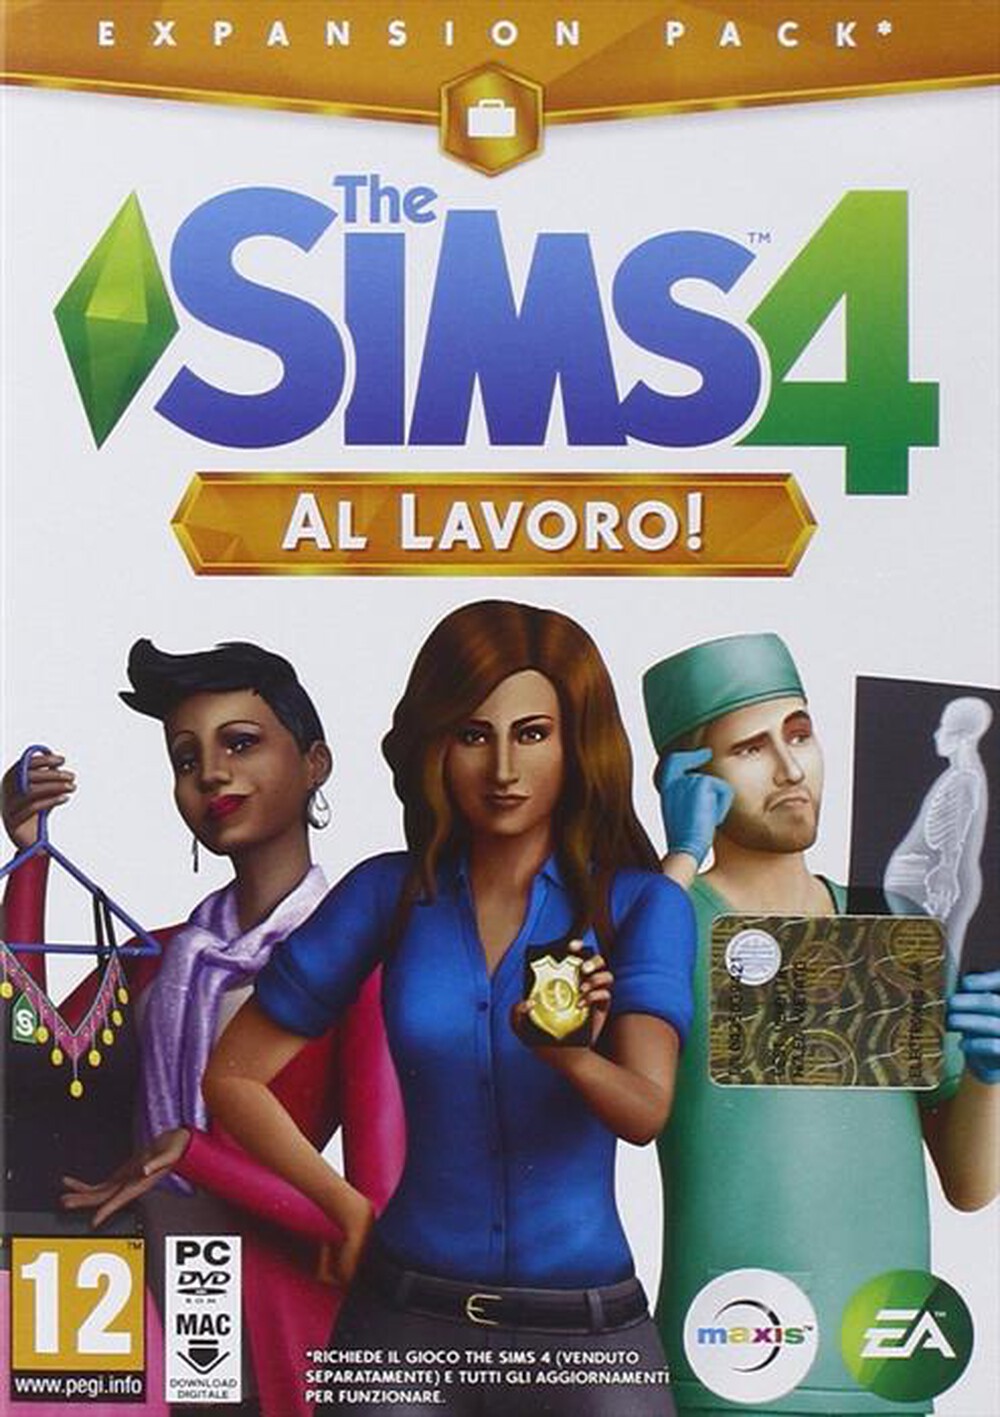 "ELECTRONIC ARTS - The Sims 4 Al Lavoro!"